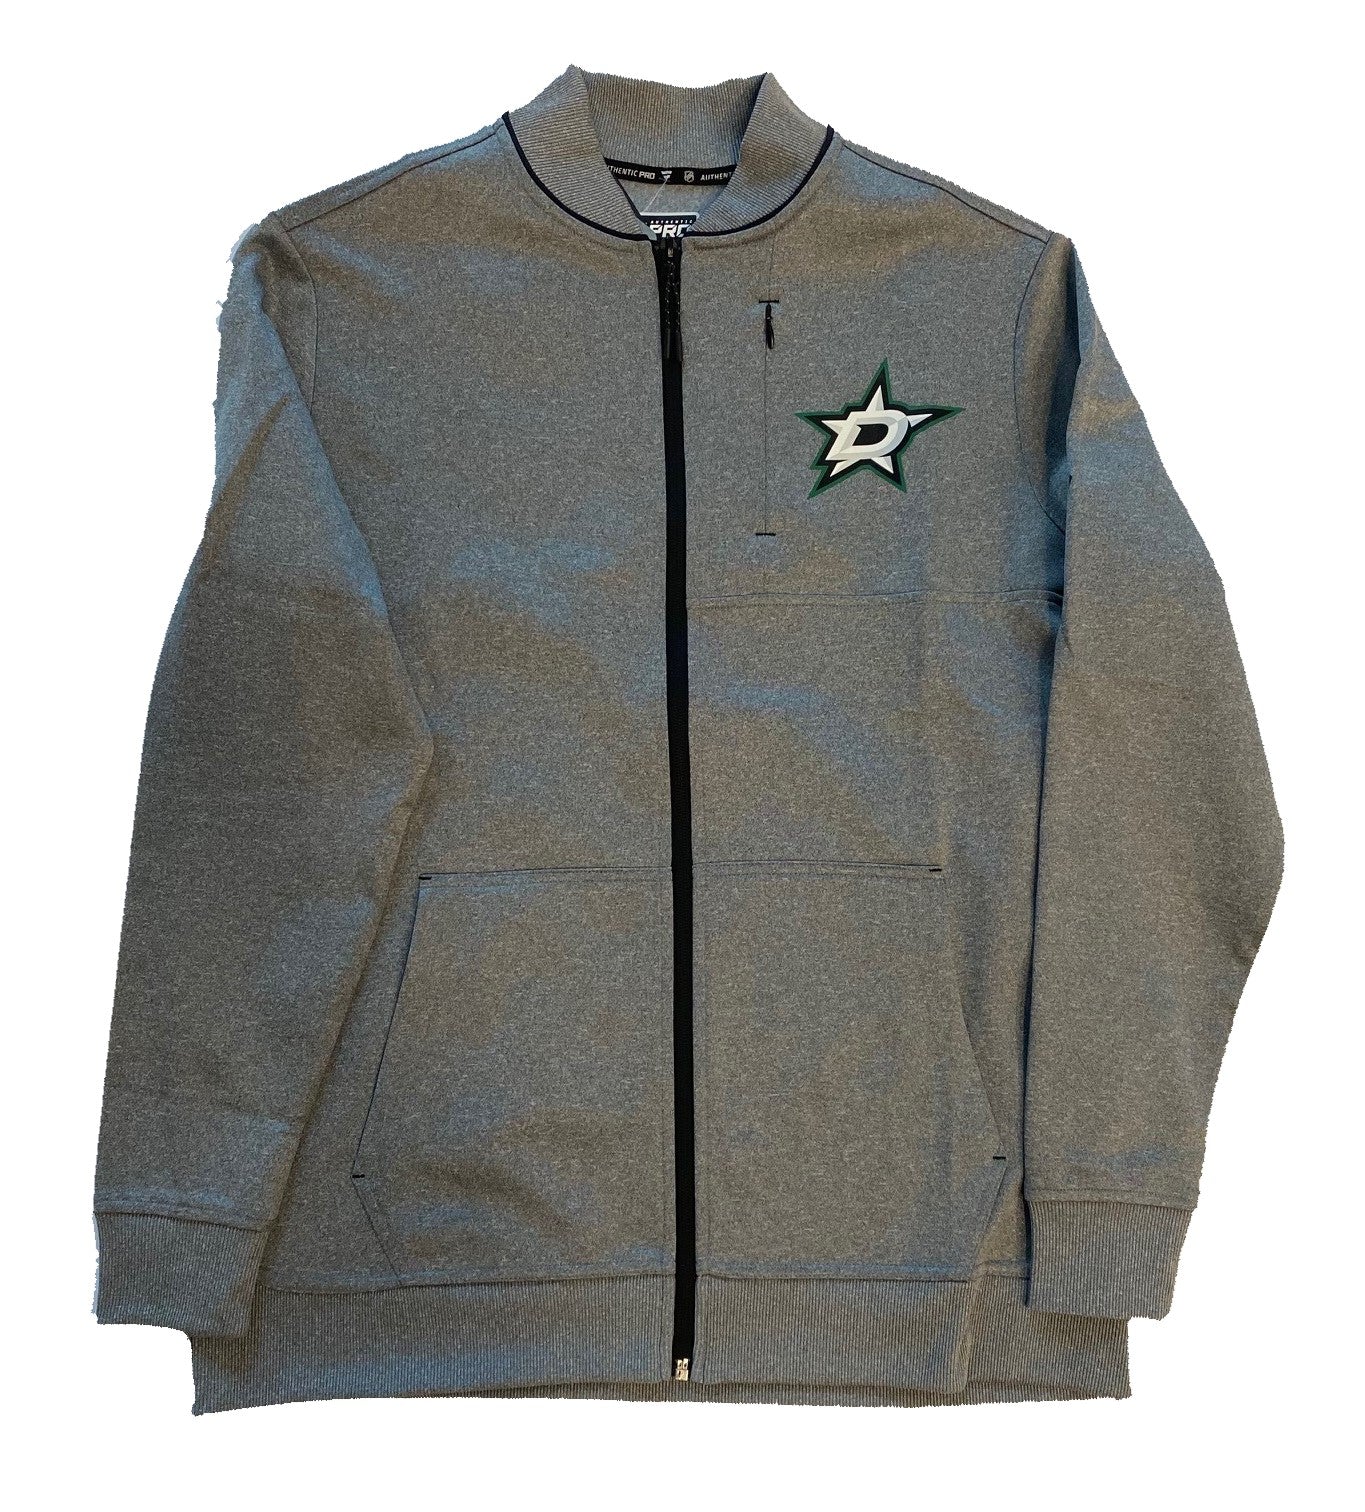 Dallas Stars Fanatics Authentic Pro Full Zip Jacket in Gray - Front View